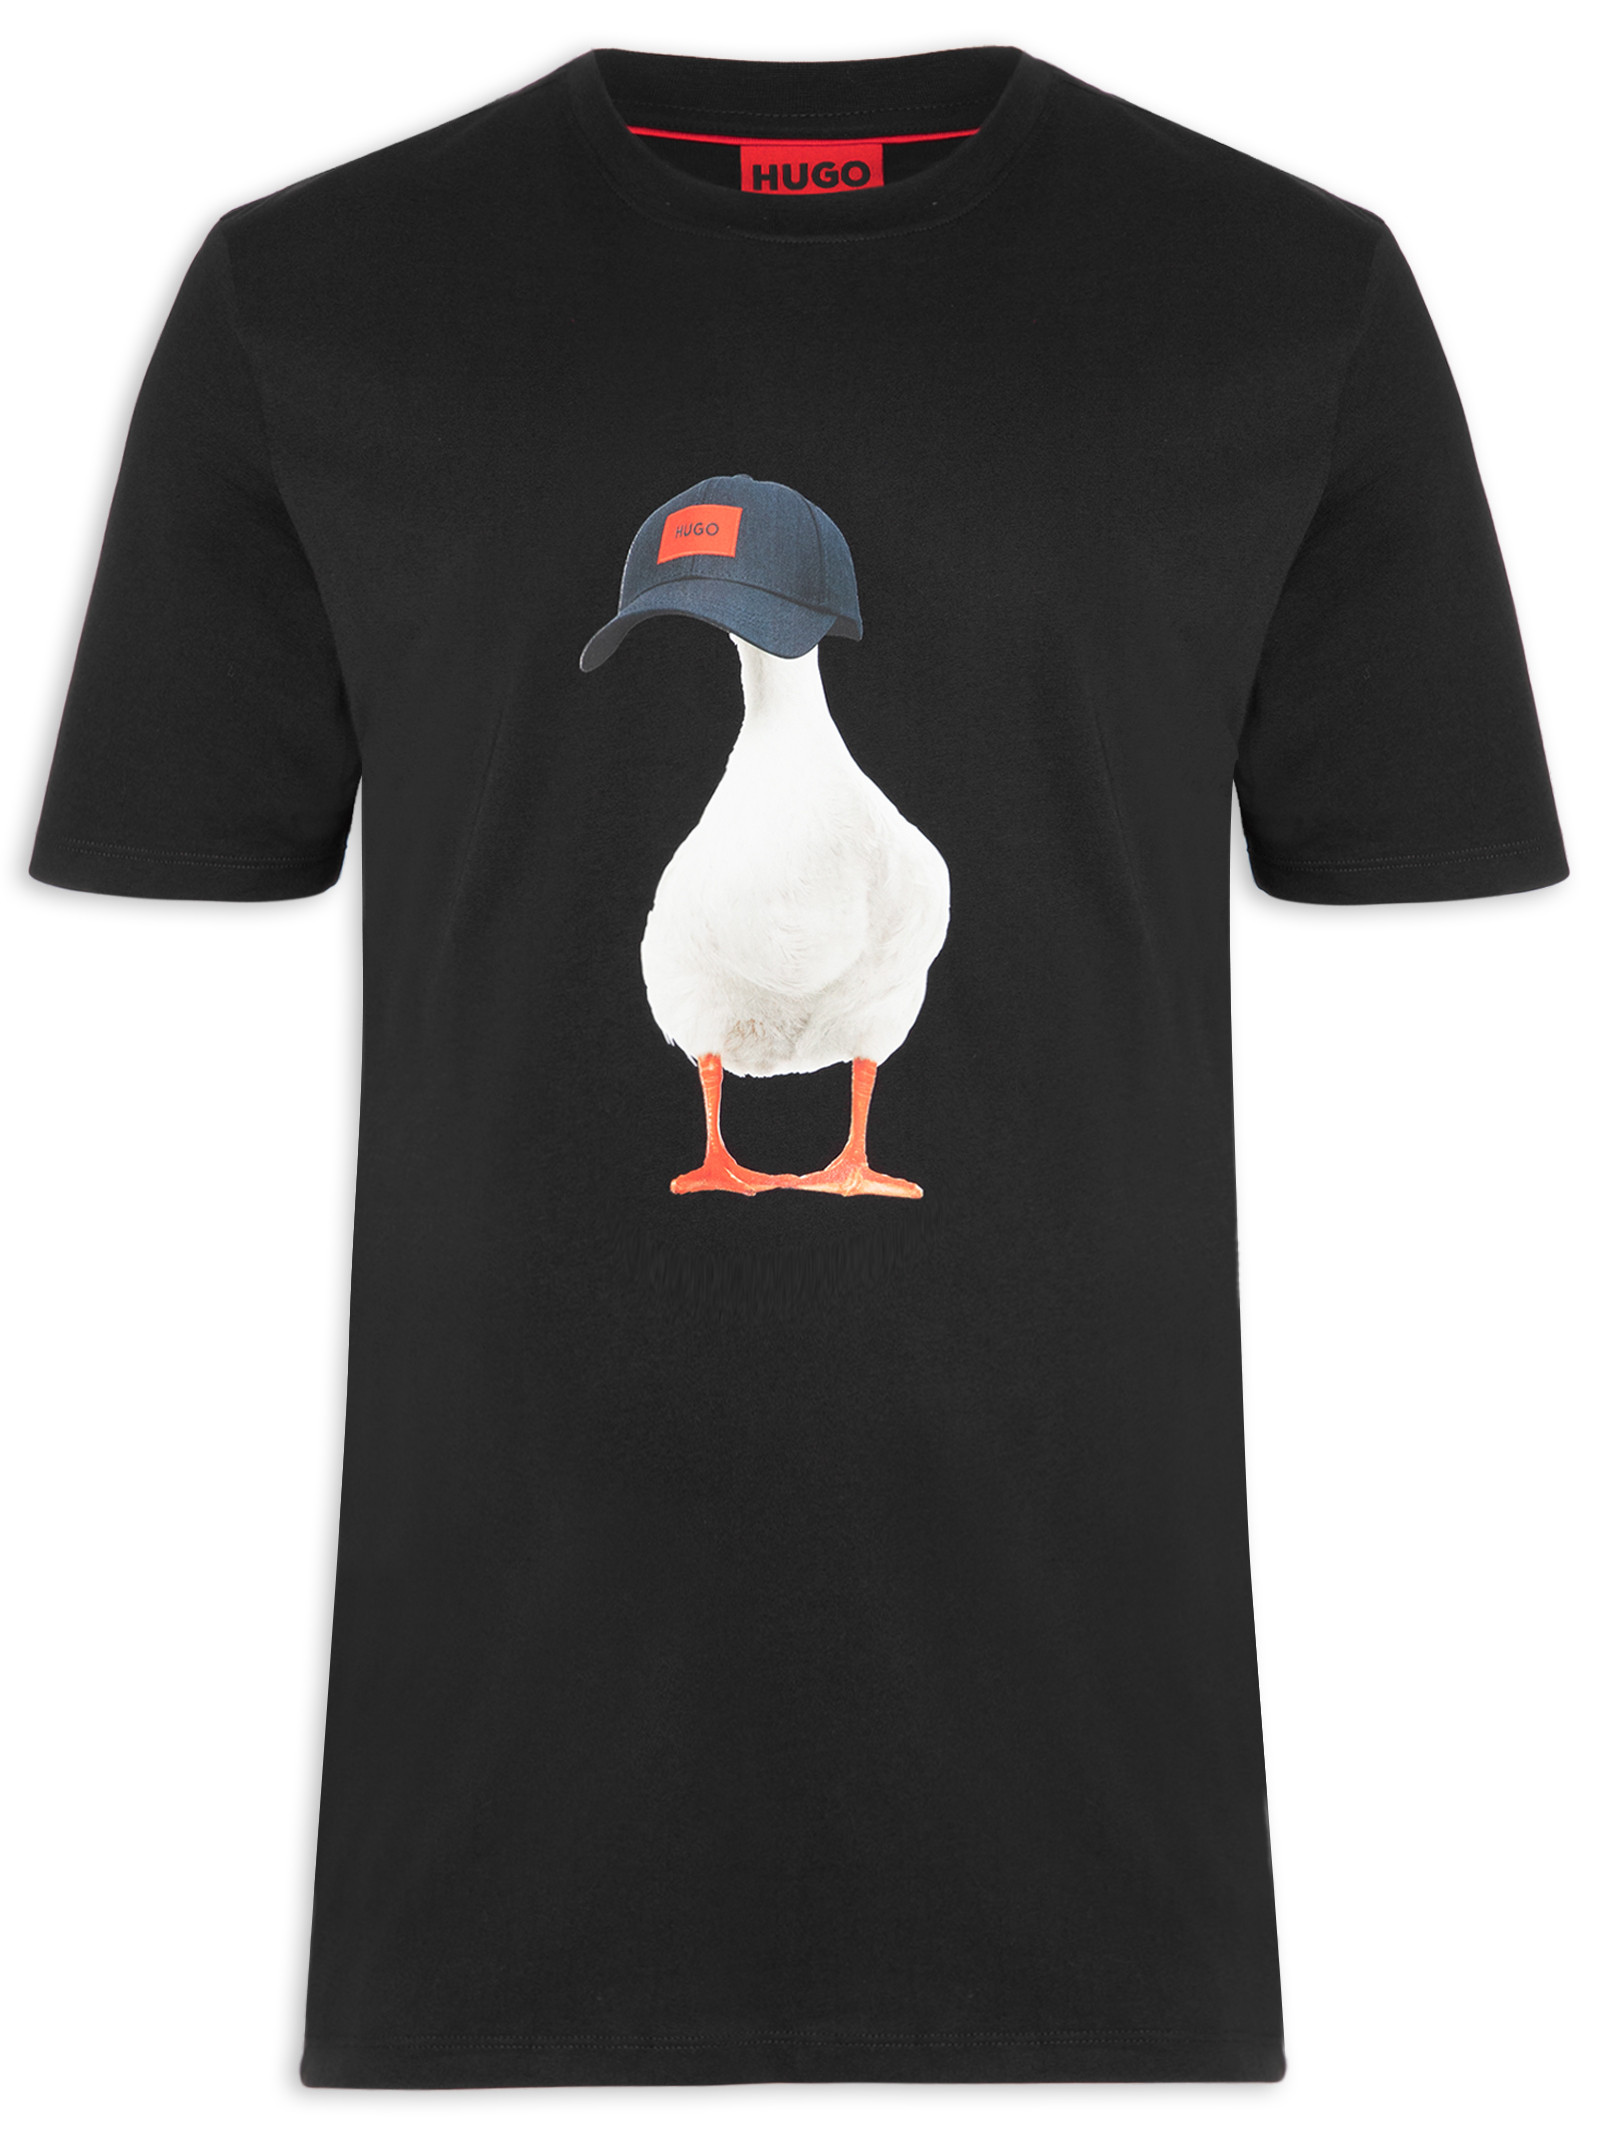 Camiseta Masculina Ducky - Hugo - Preta - Shop2gether